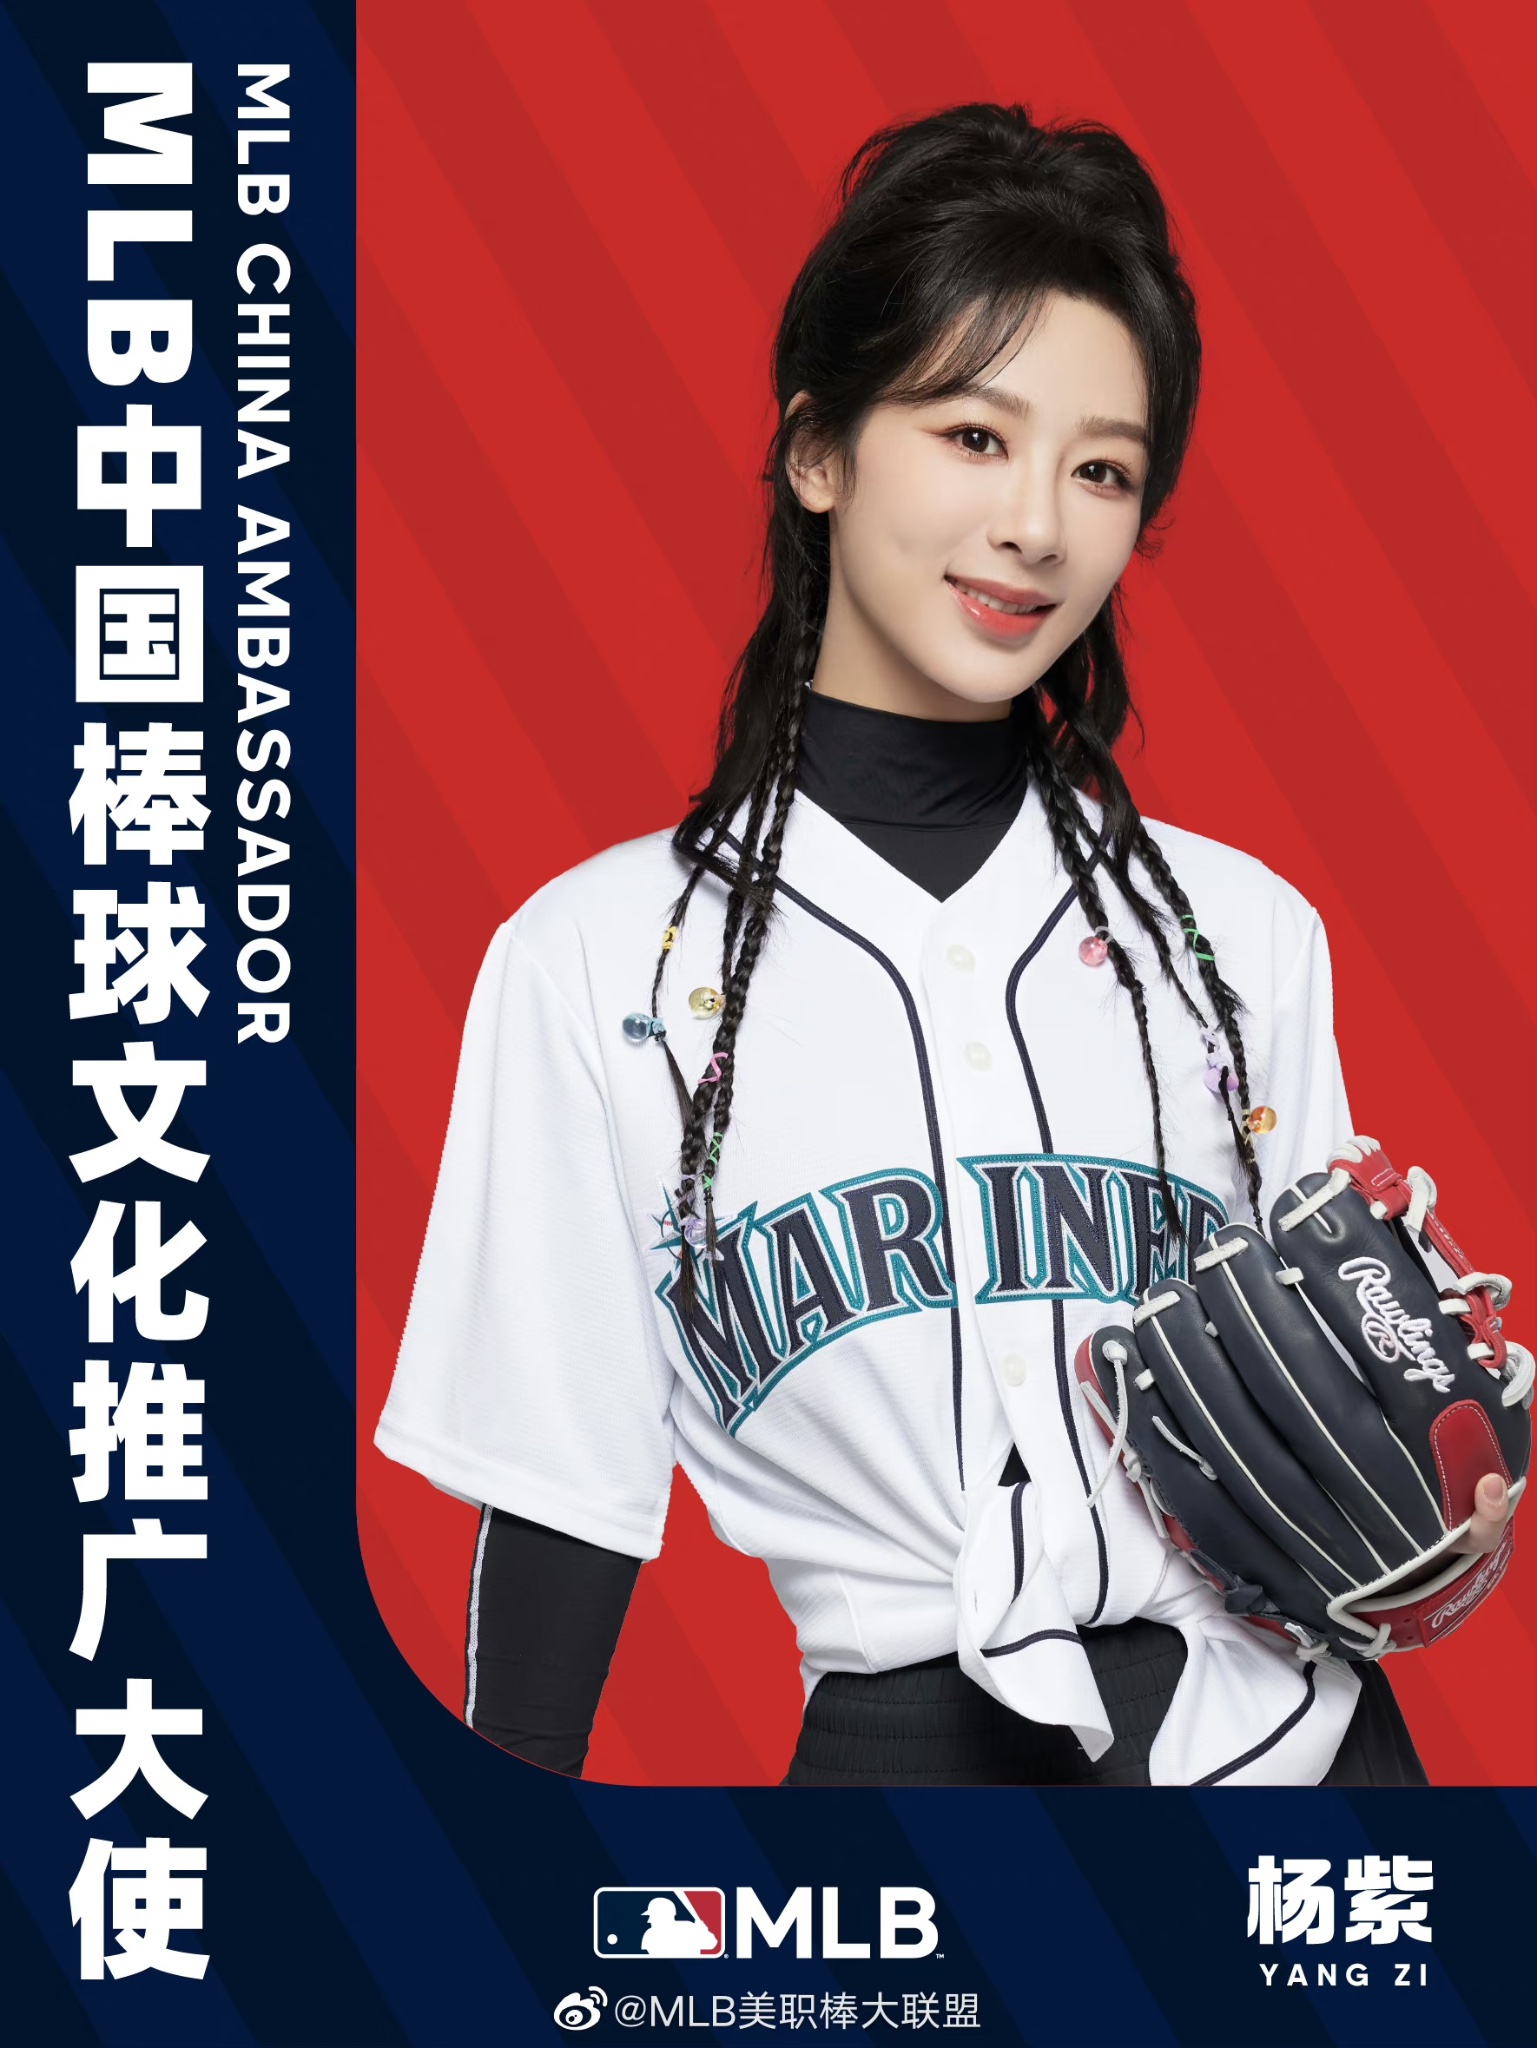 MLB China Series  Wikipedia